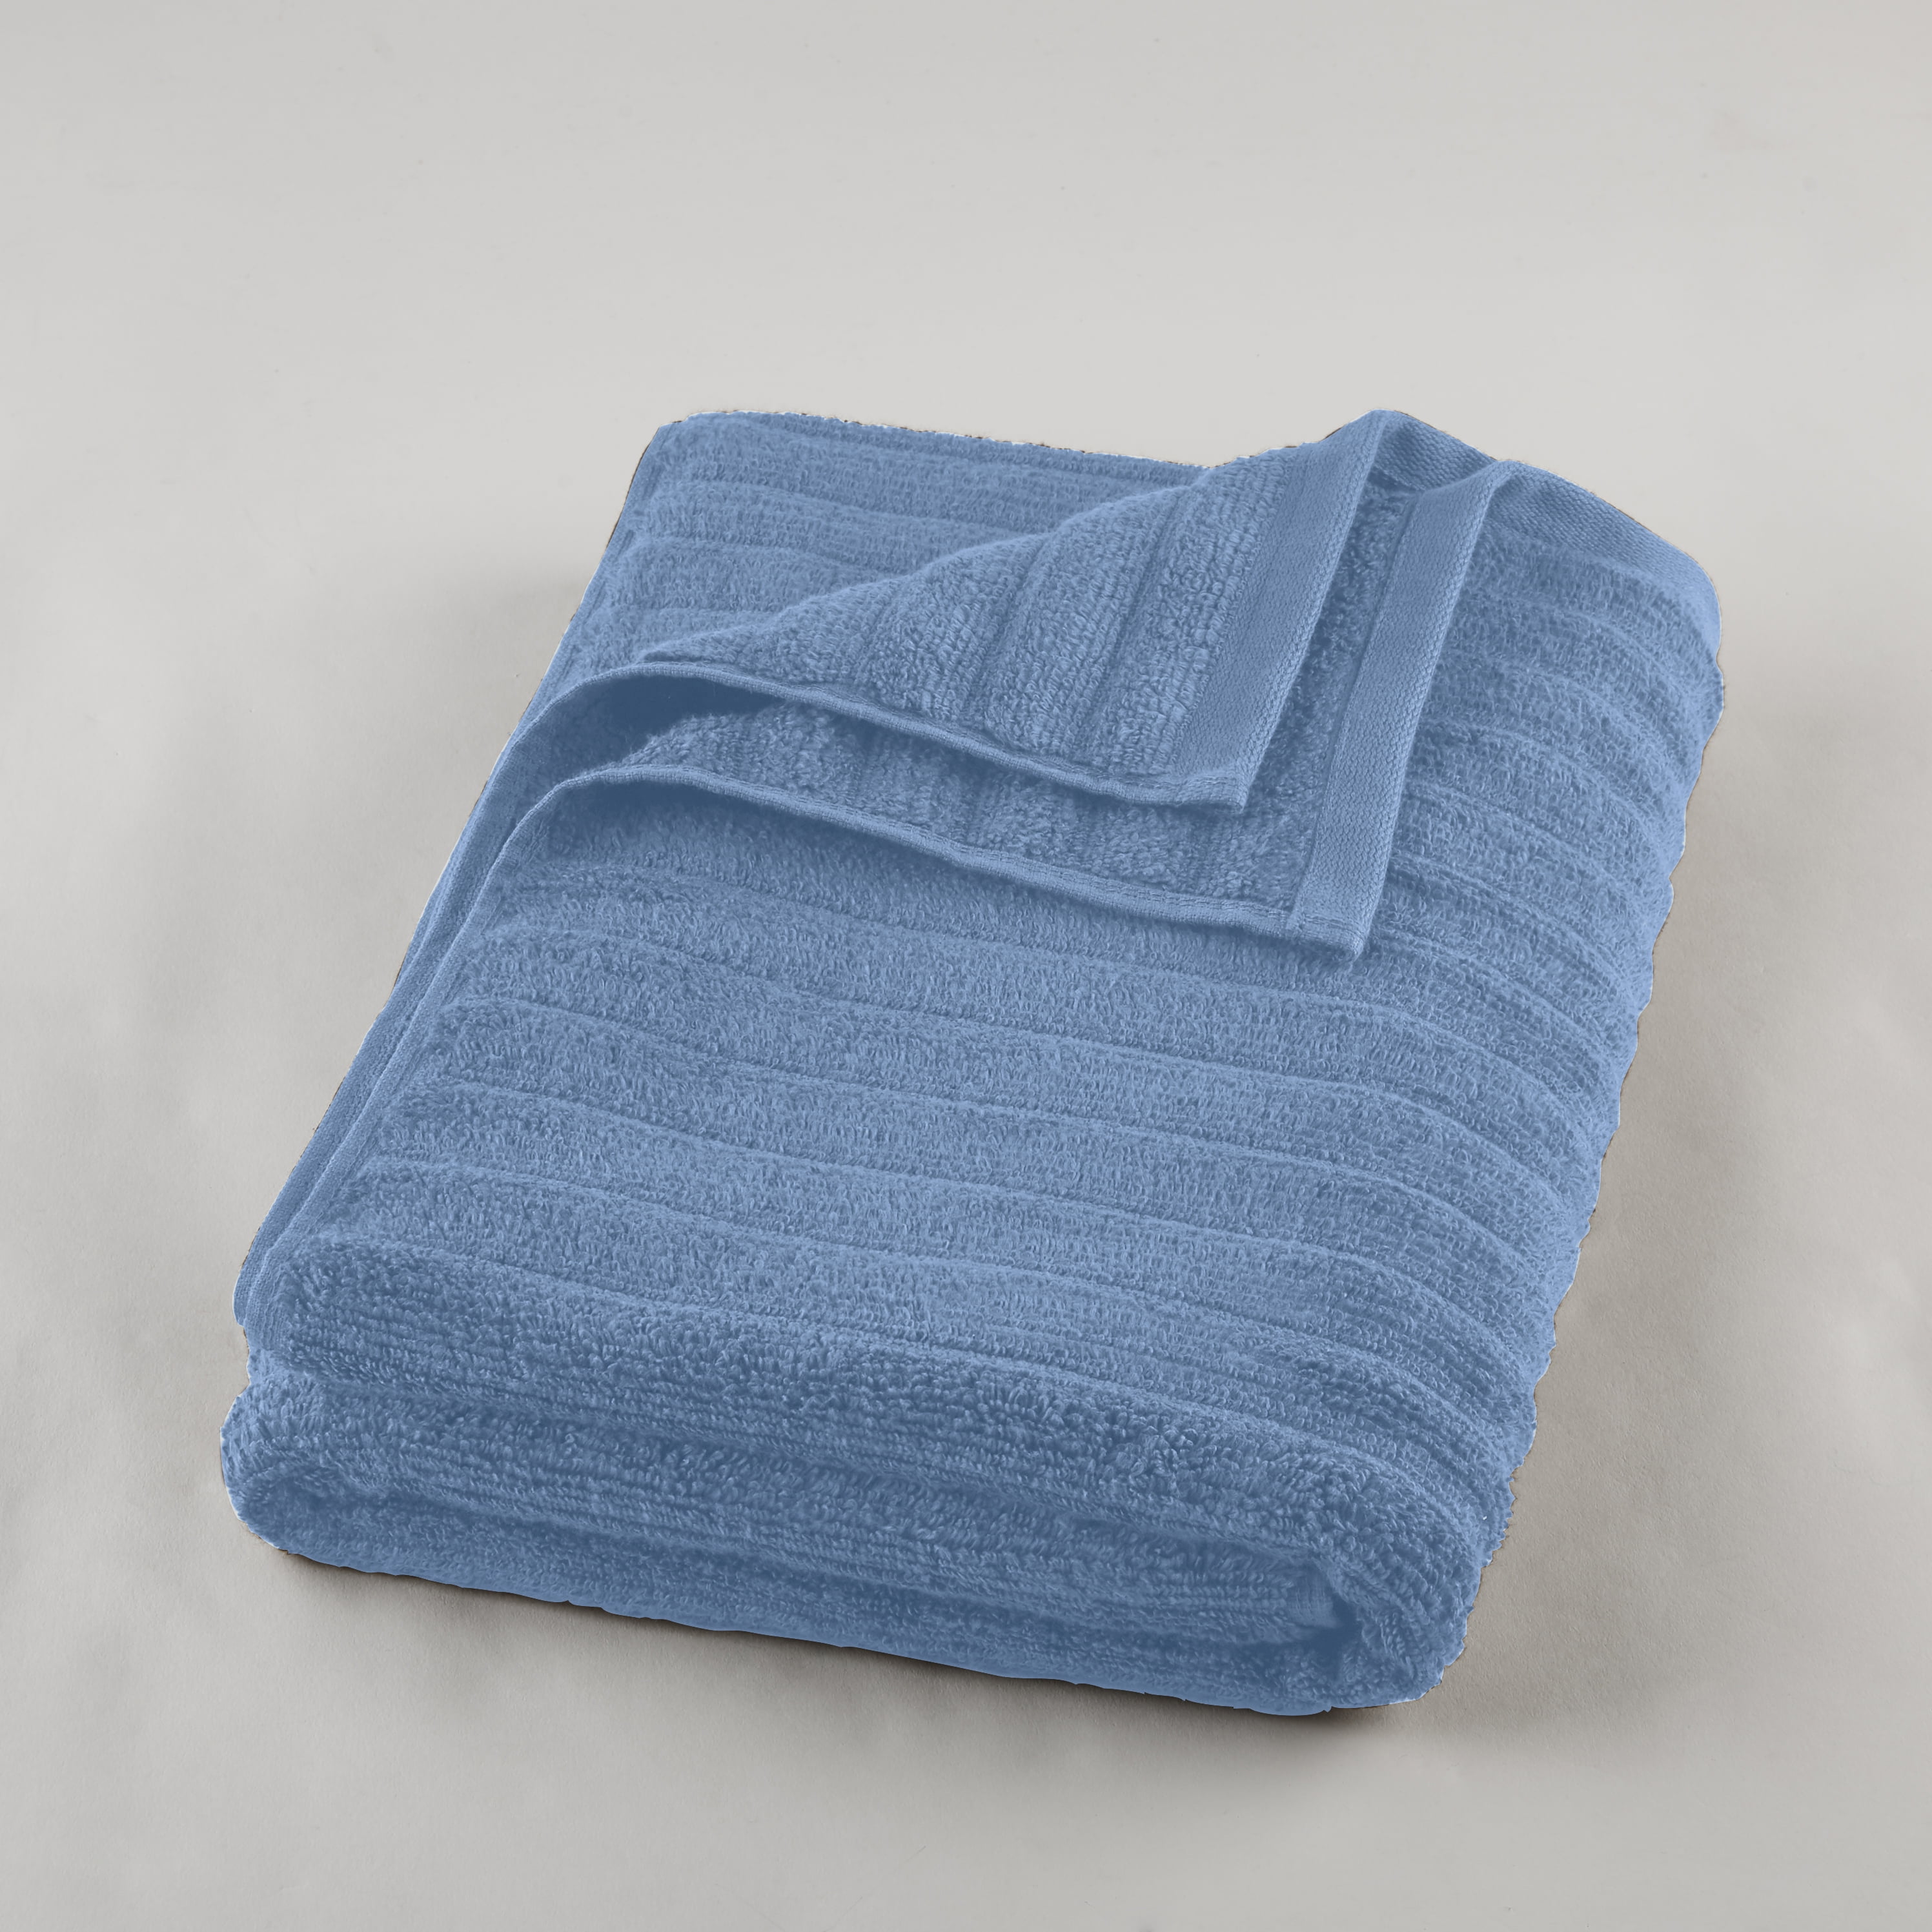 Black Bedding Heaven Pack of 6 Egyptian Cotton Guest Towels 40 cm x 60 cm 